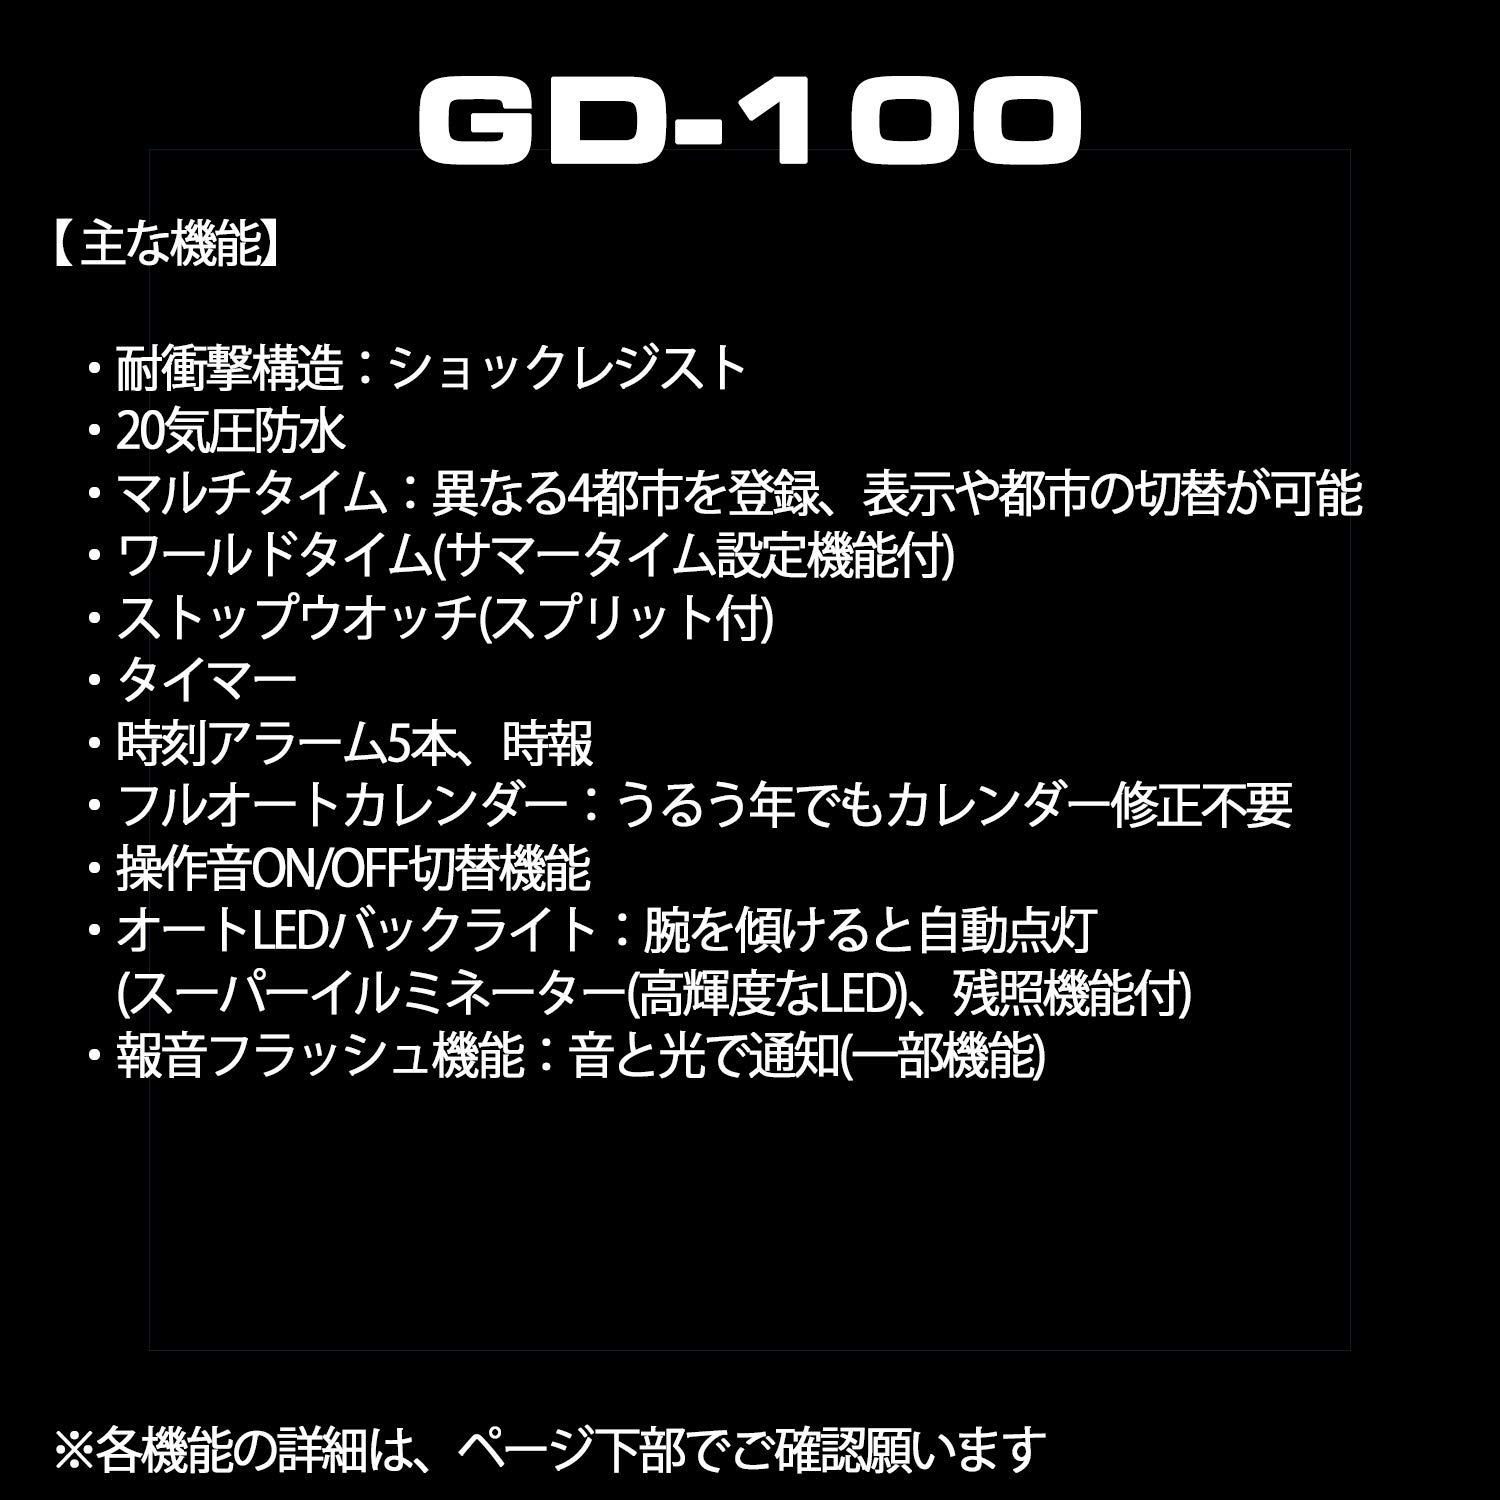 CASIO G-Shock Watch GD-100-1AJF Japan Import